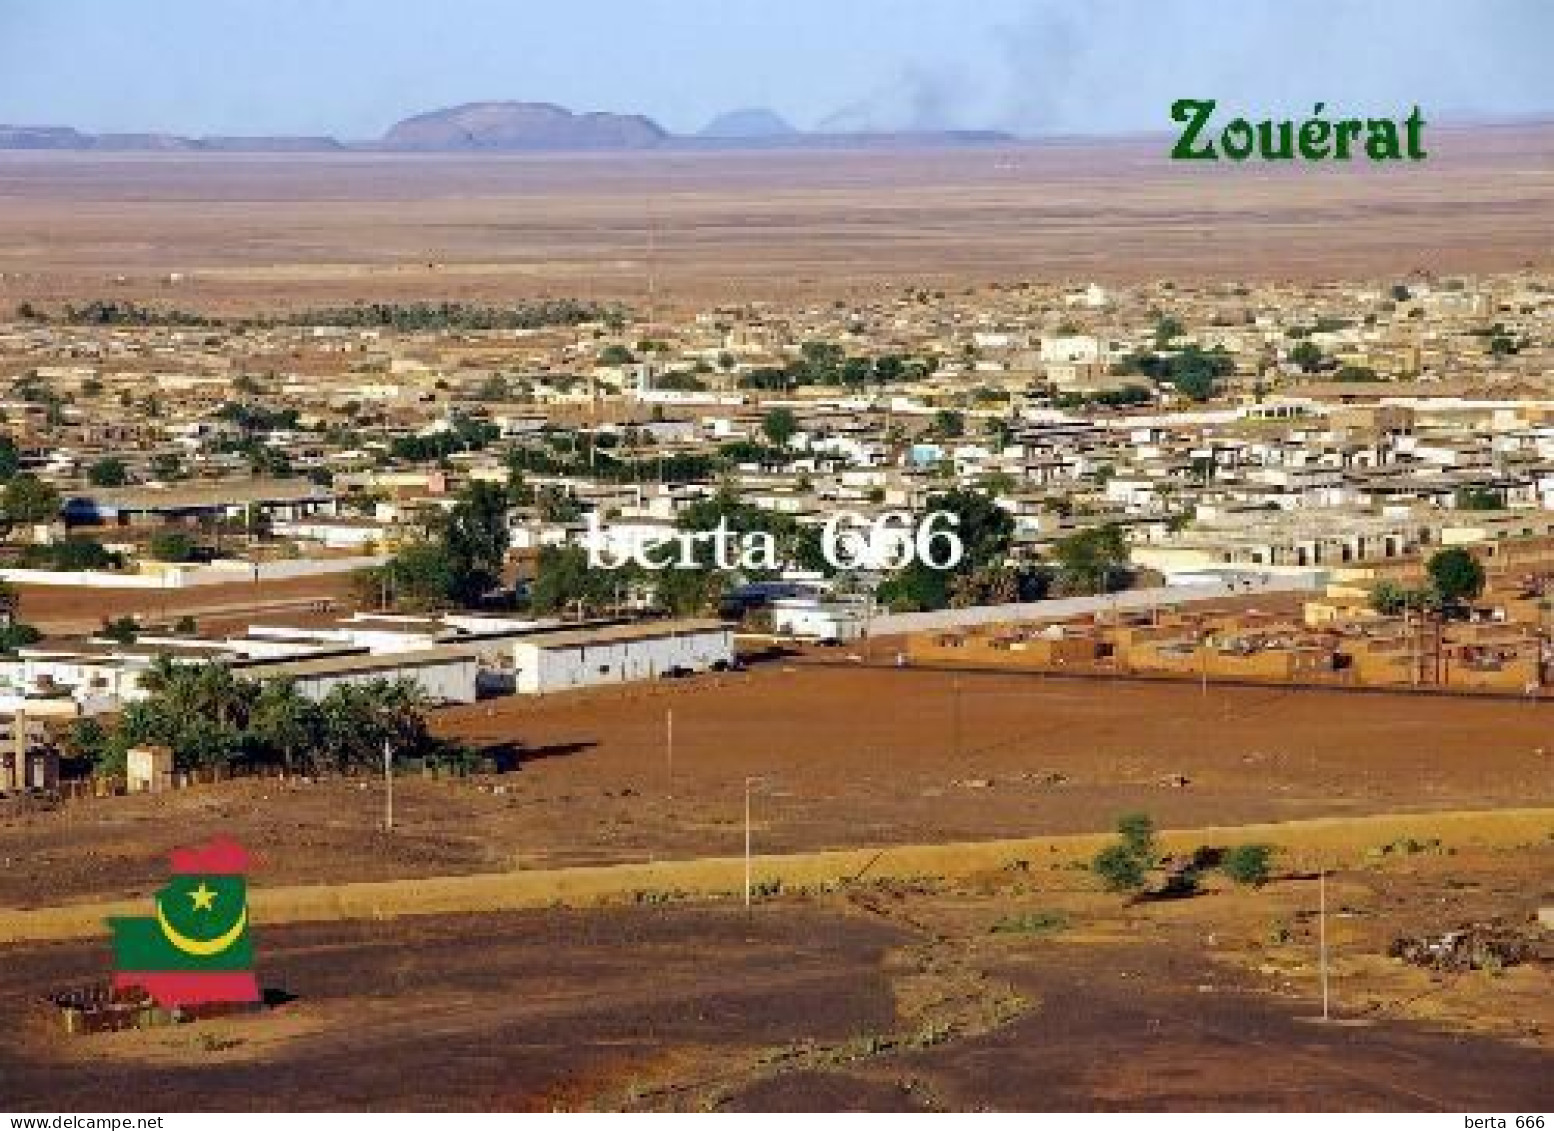 Mauritania Zouerat Overview New Postcard - Mauritania